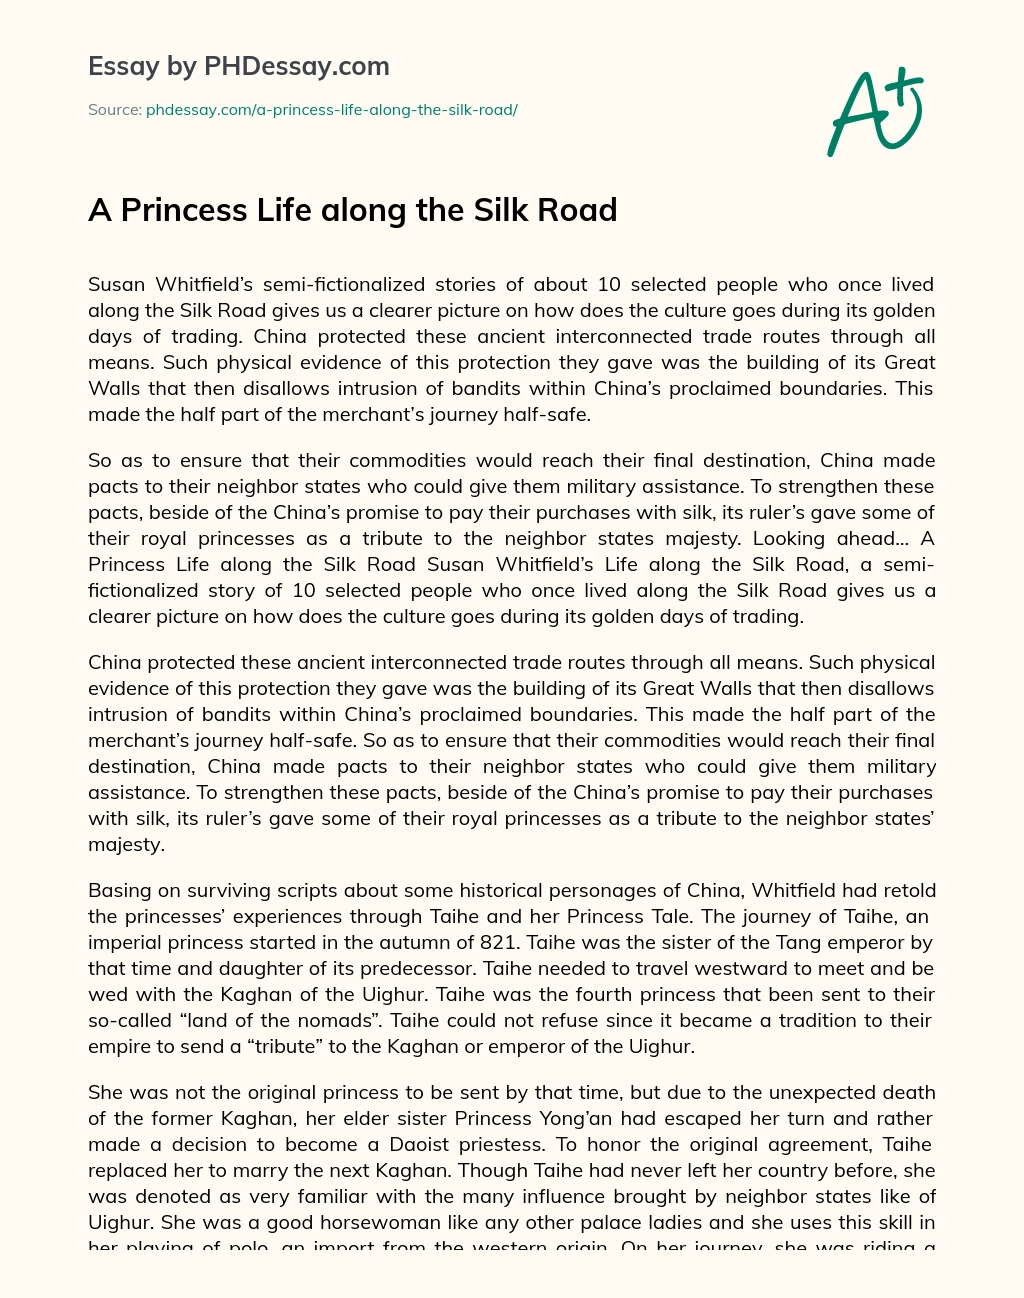 A Princess Life along the Silk Road essay